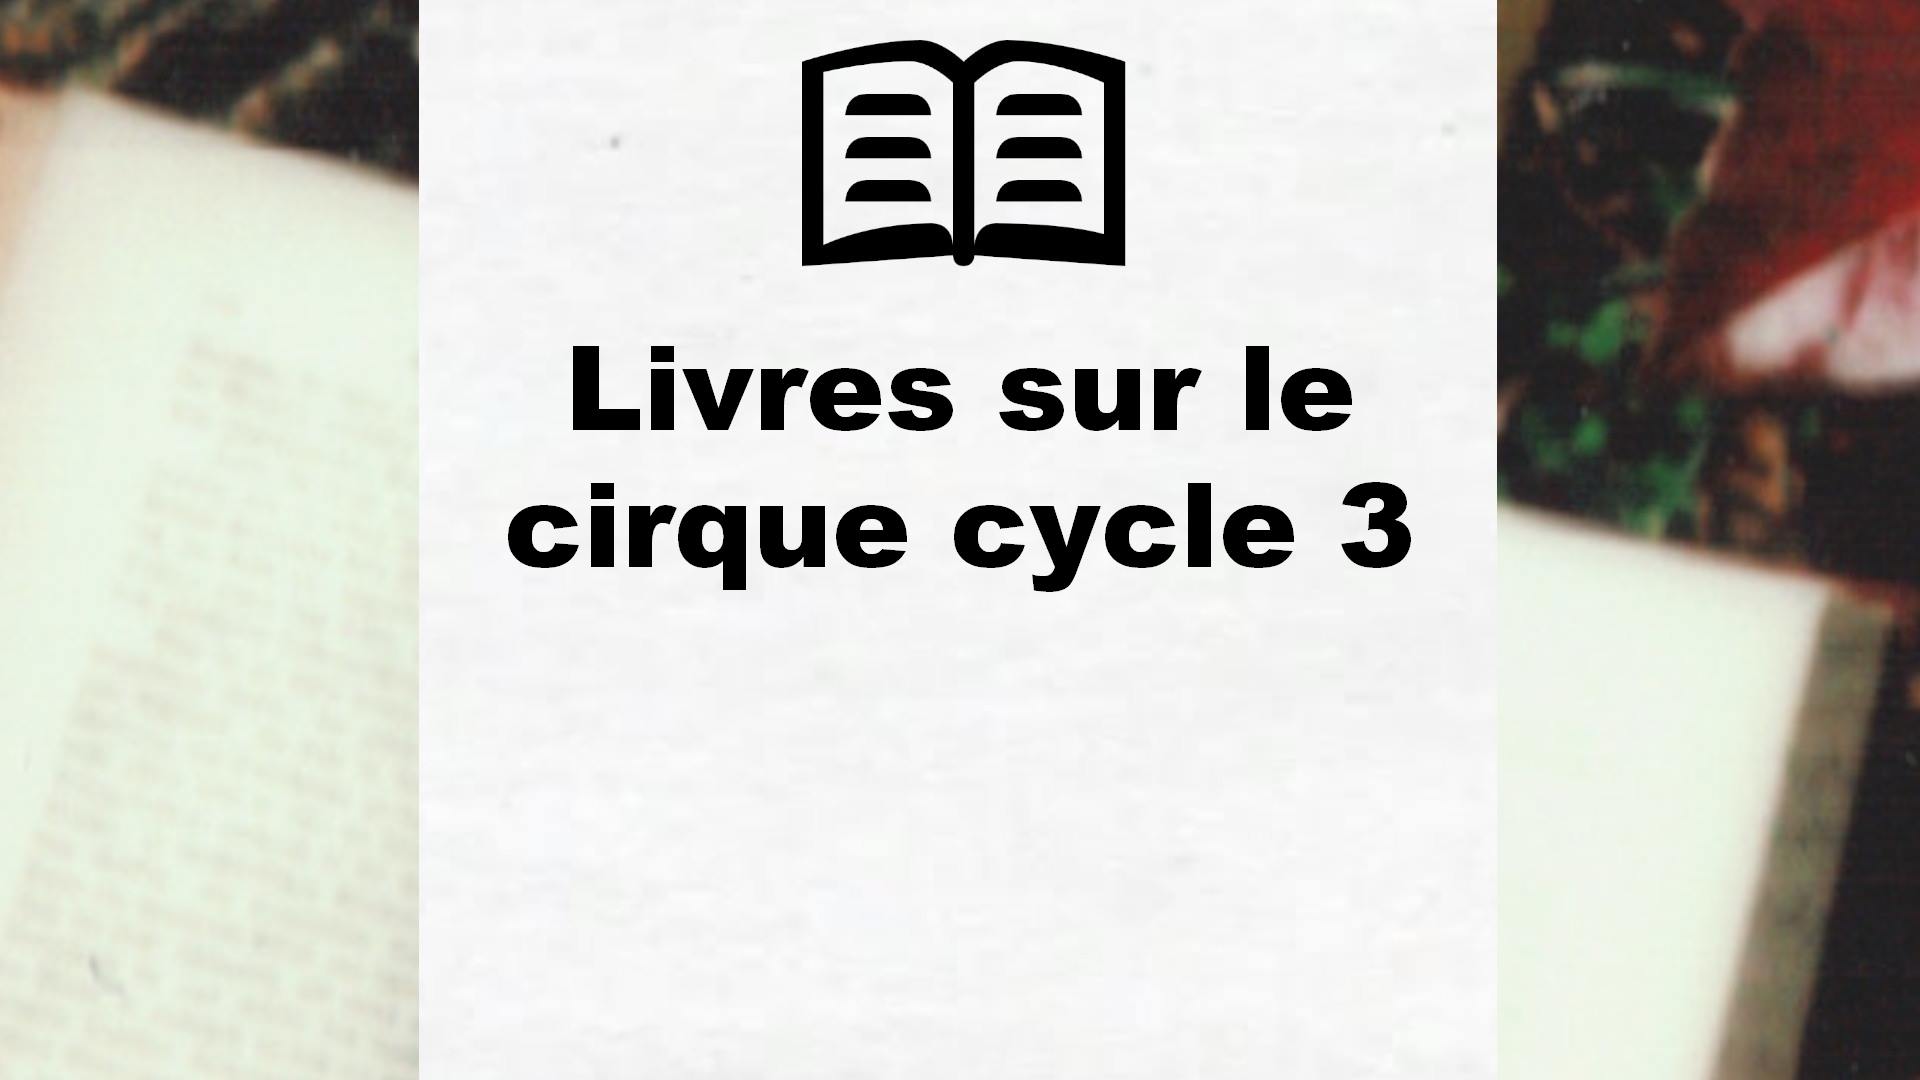 Livres sur le cirque cycle 3